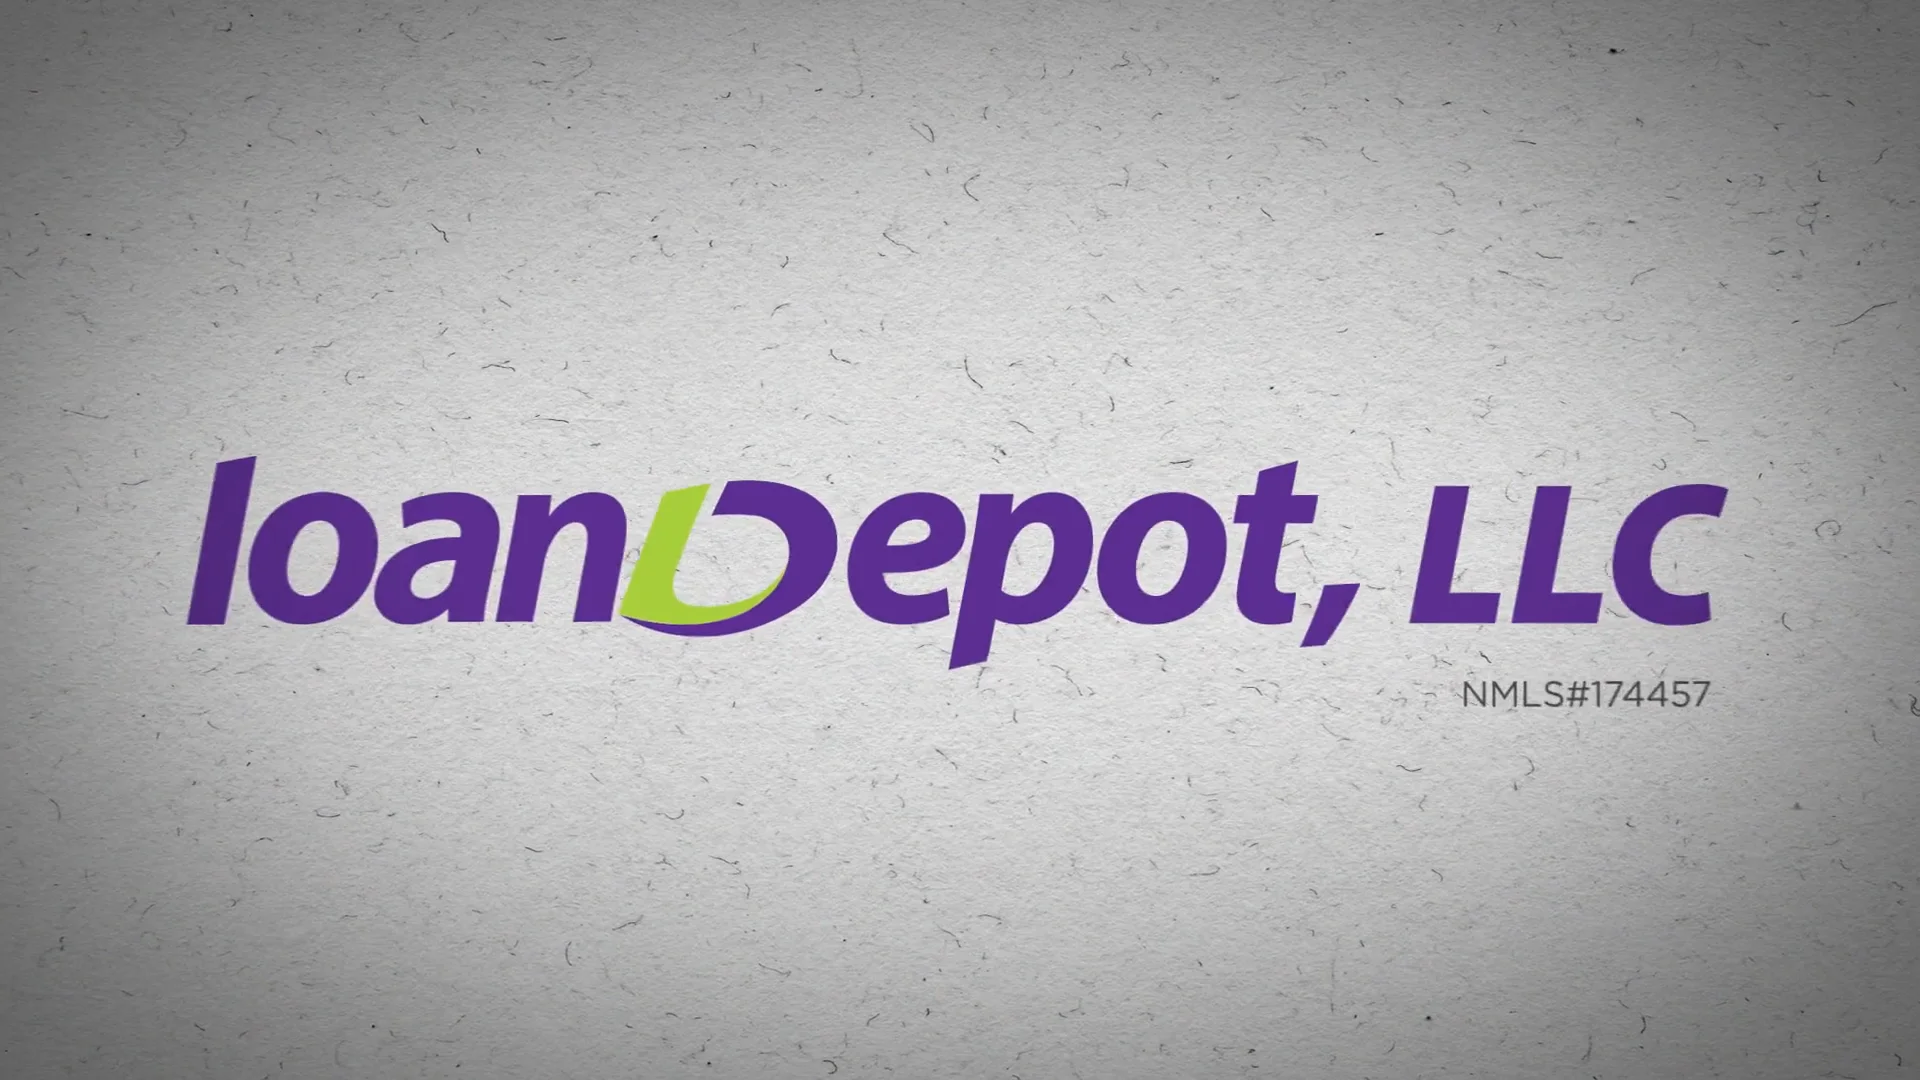 LoanDepot Holiday Spending Spot on Vimeo